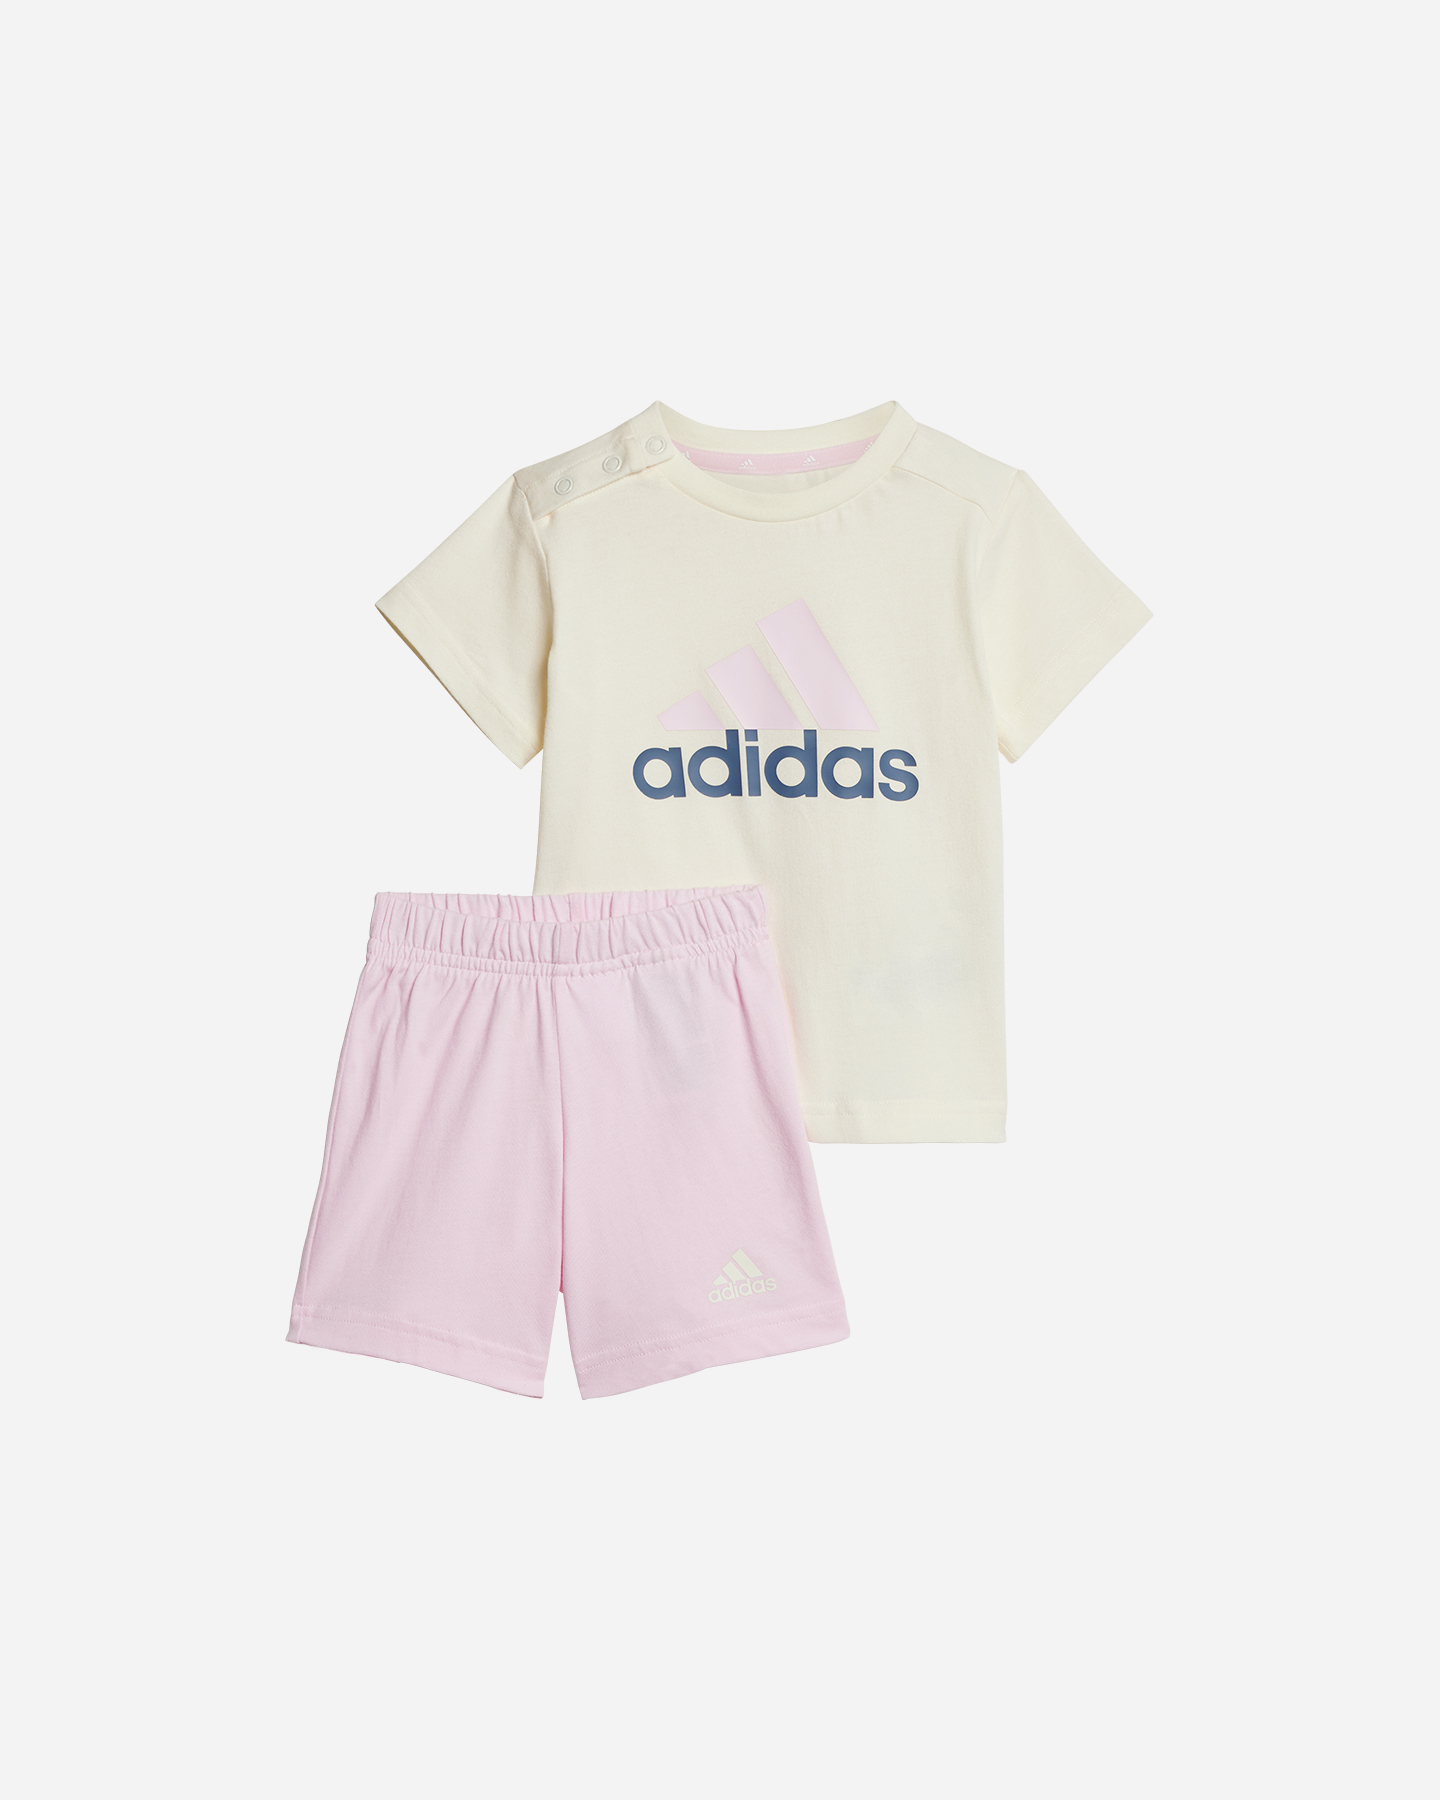 Image of Adidas Infant Girl Jr - Completo